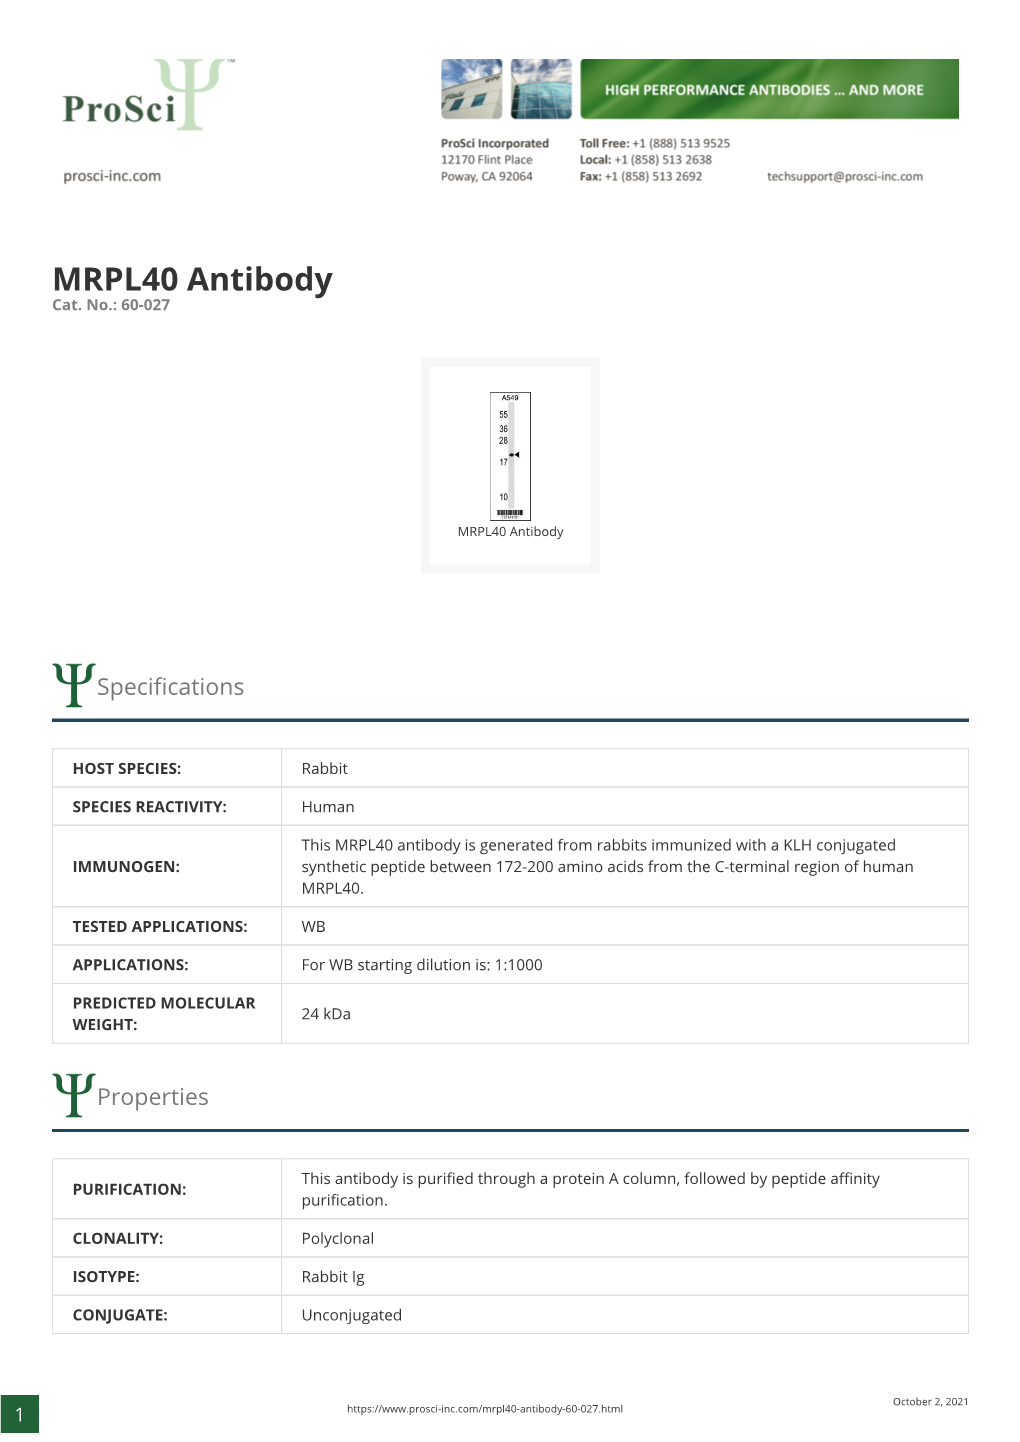 MRPL40 Antibody Cat